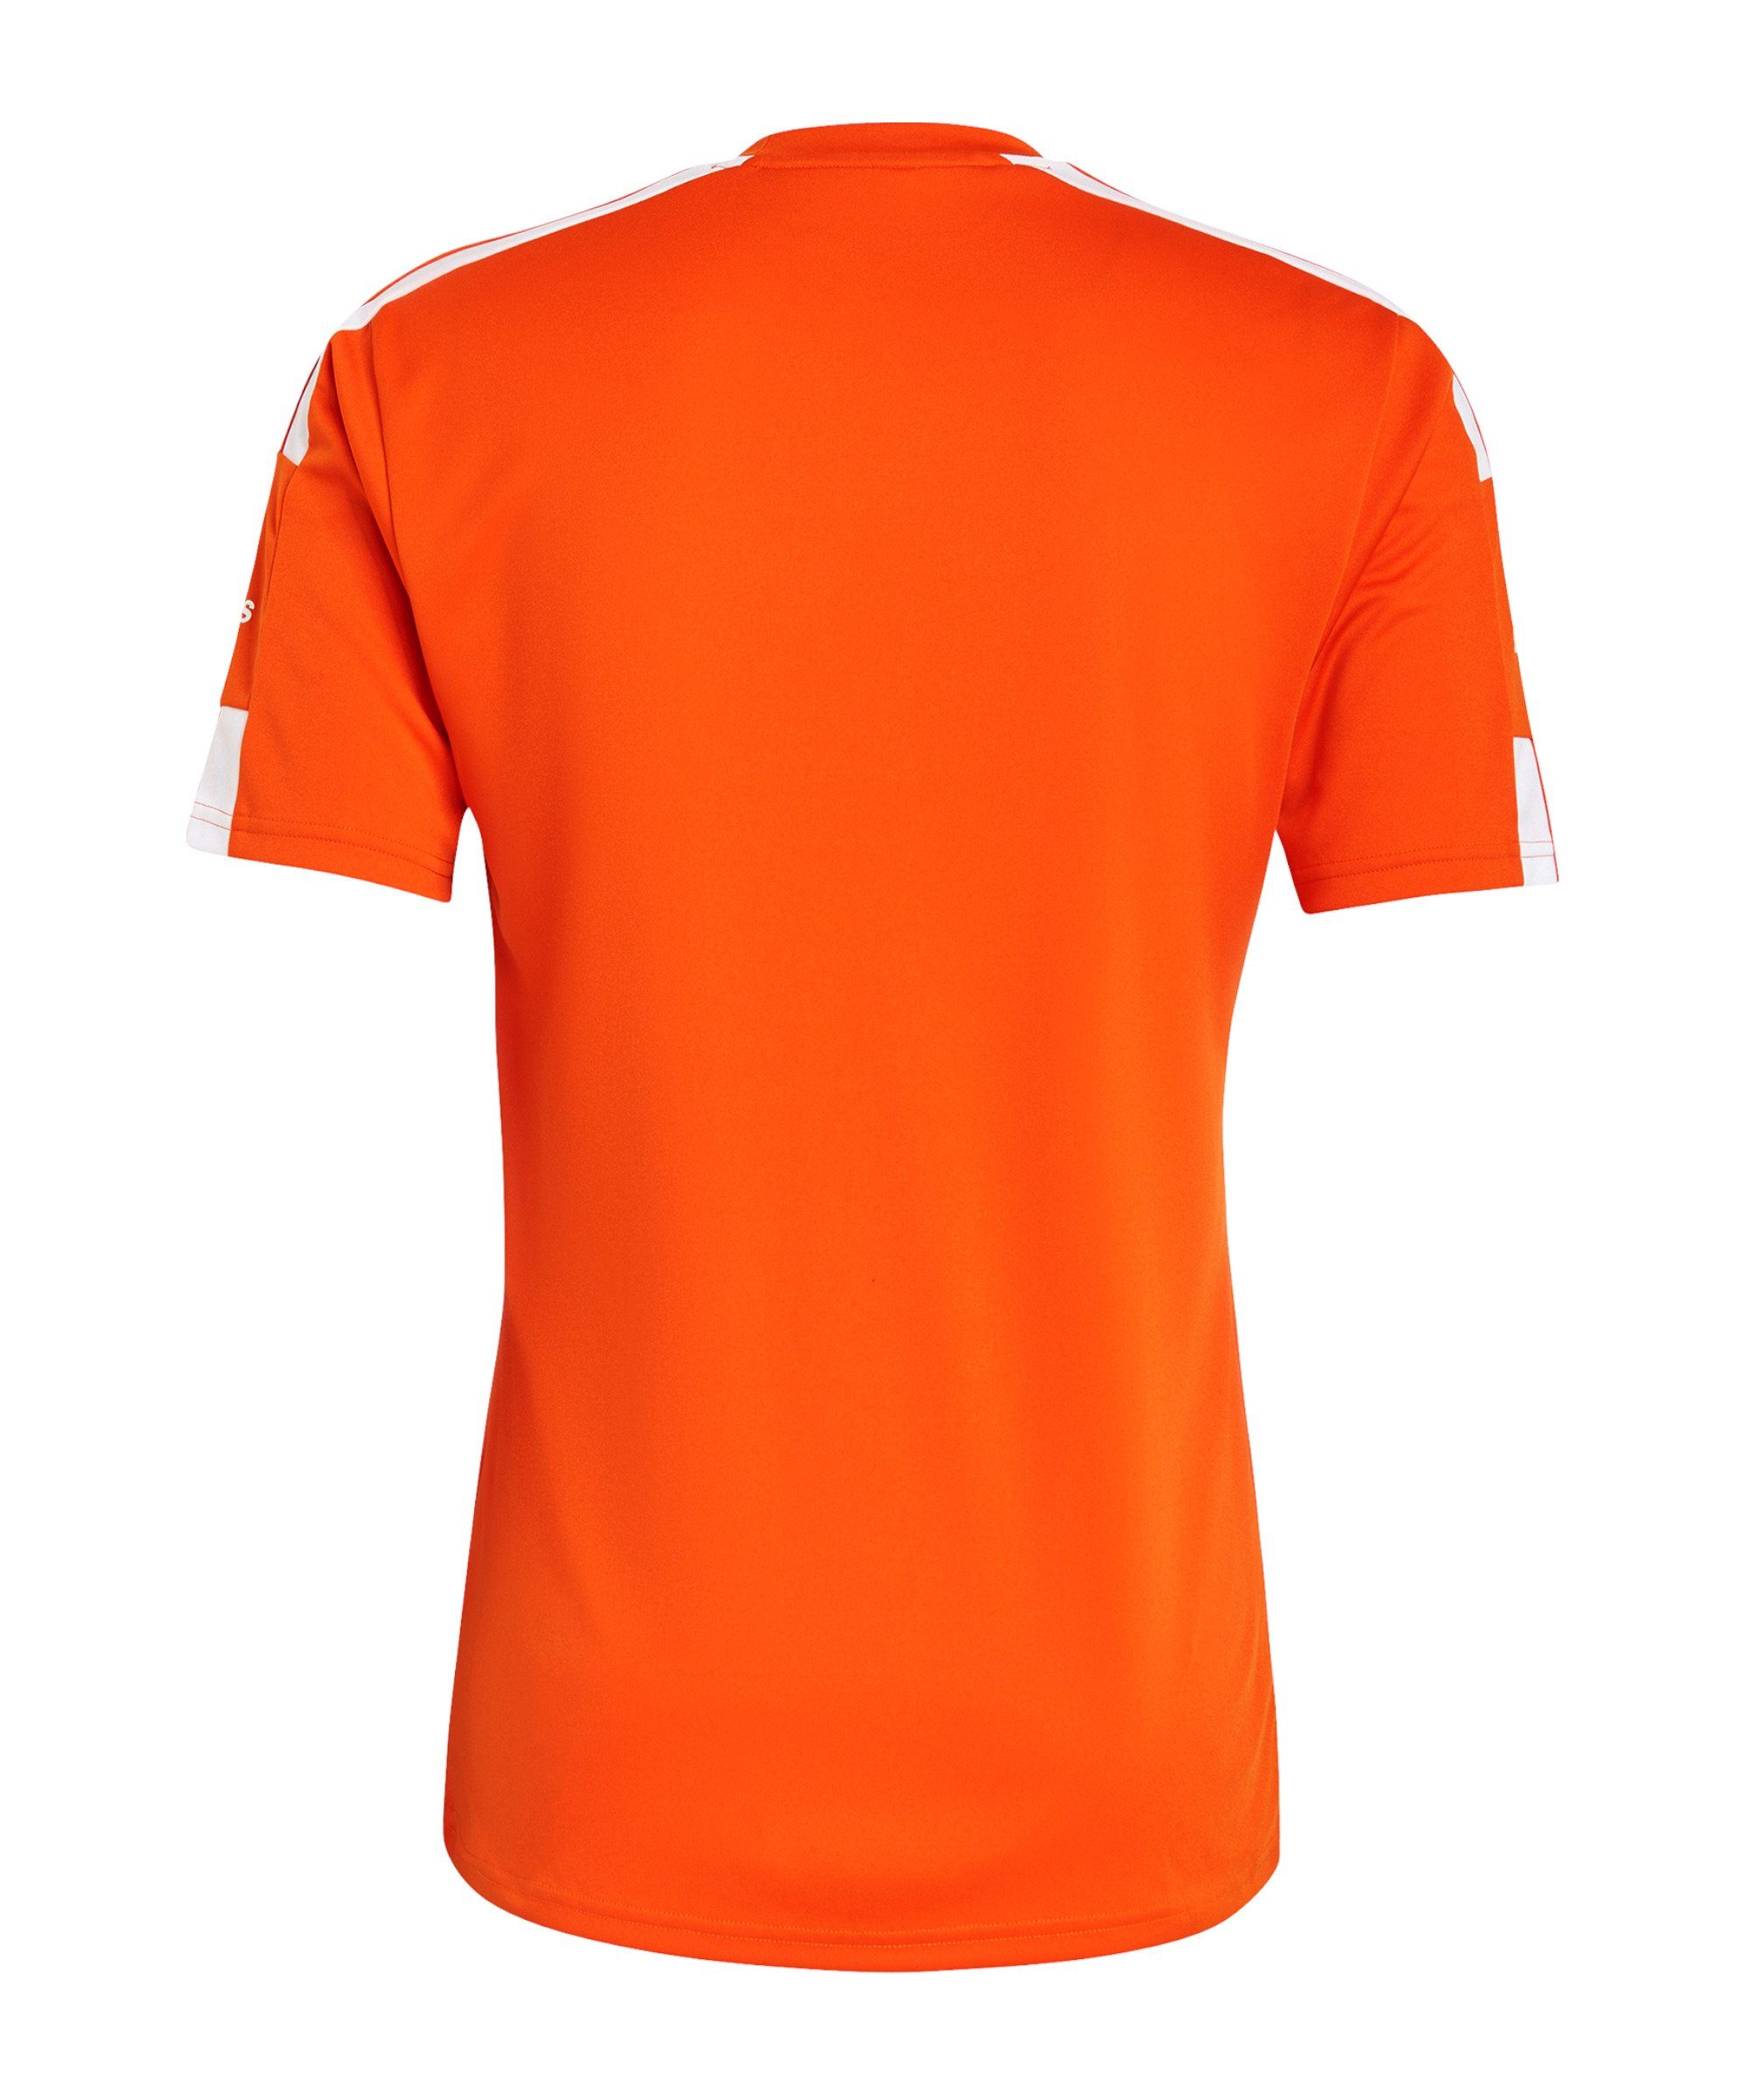 Performance Fußballtrikot 21 adidas Squadra Trikot orangeweiss kurzarm